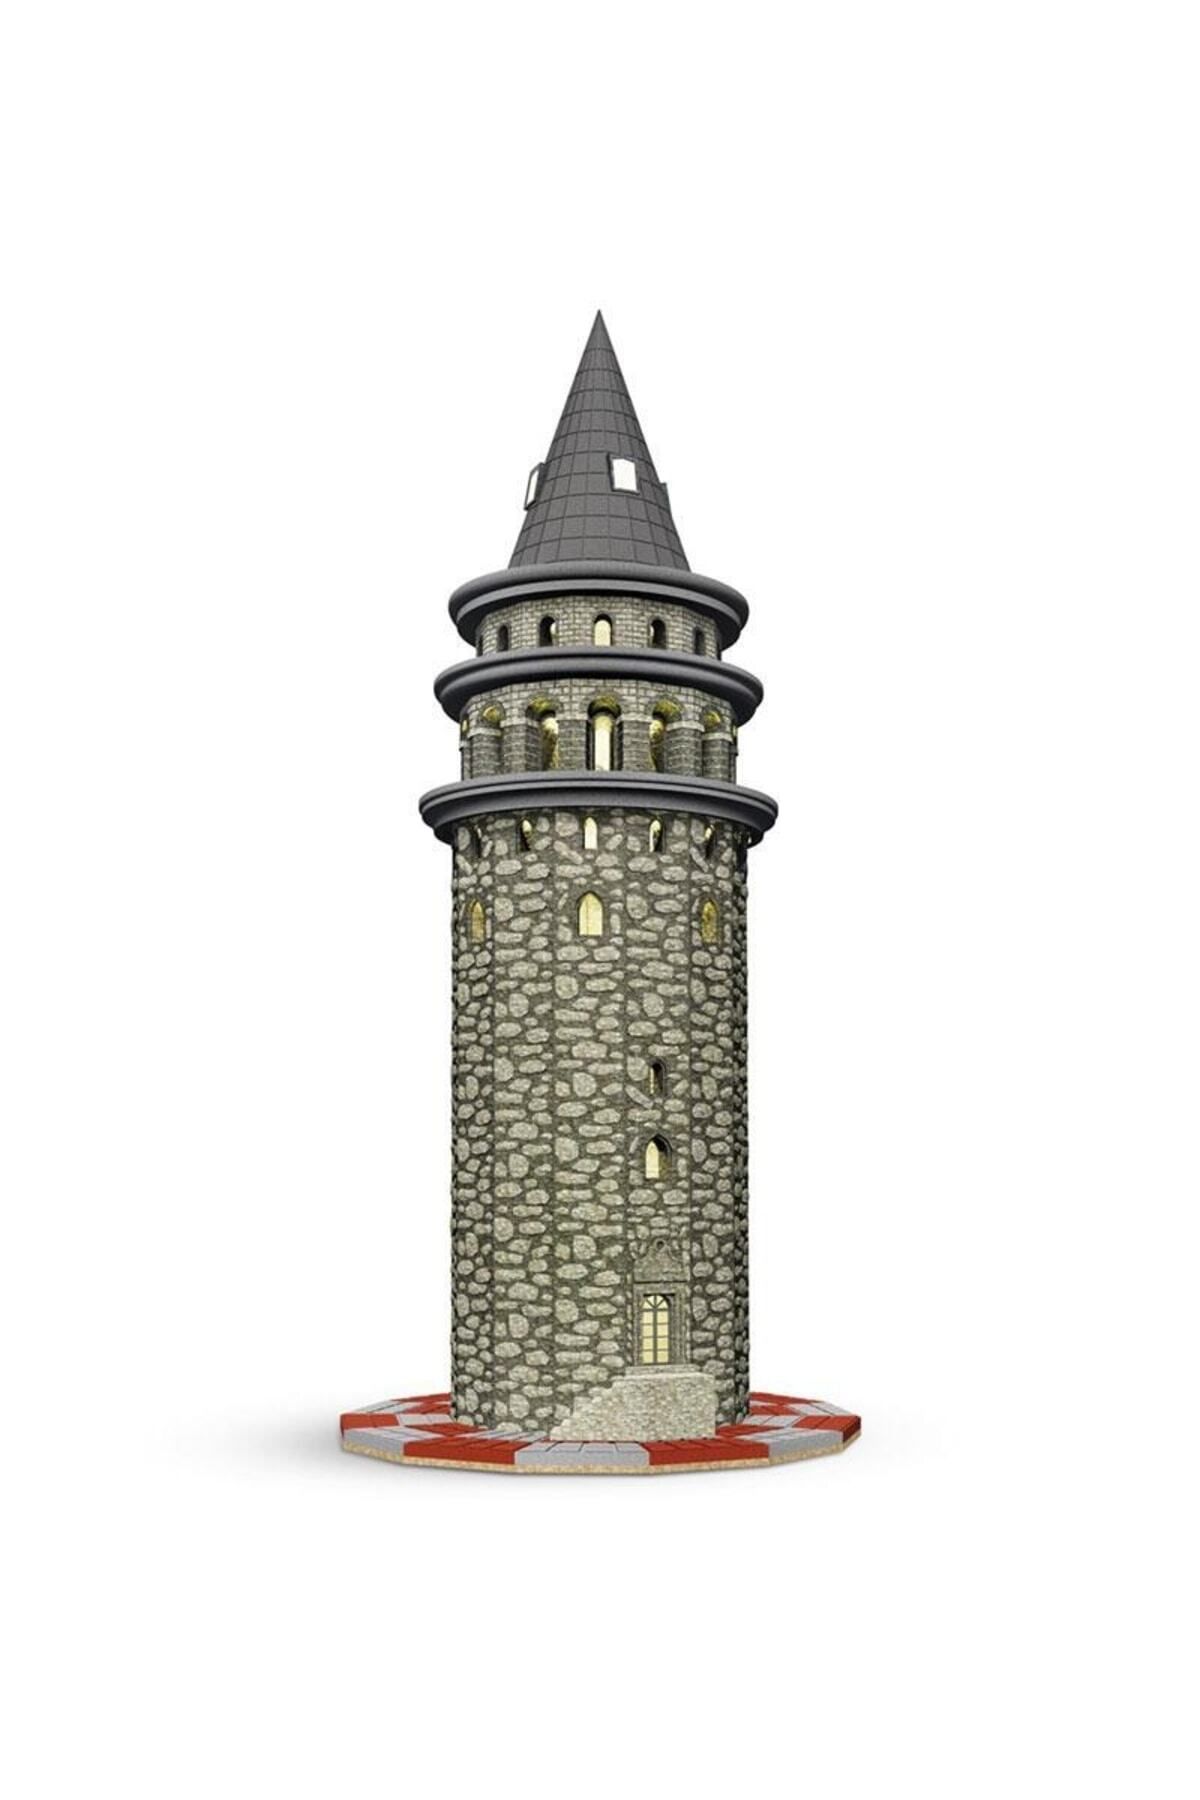 Eshel Maket Galata Kulesi 200*200*450mm Ebatı 1:150 Ölçek 98 Parça